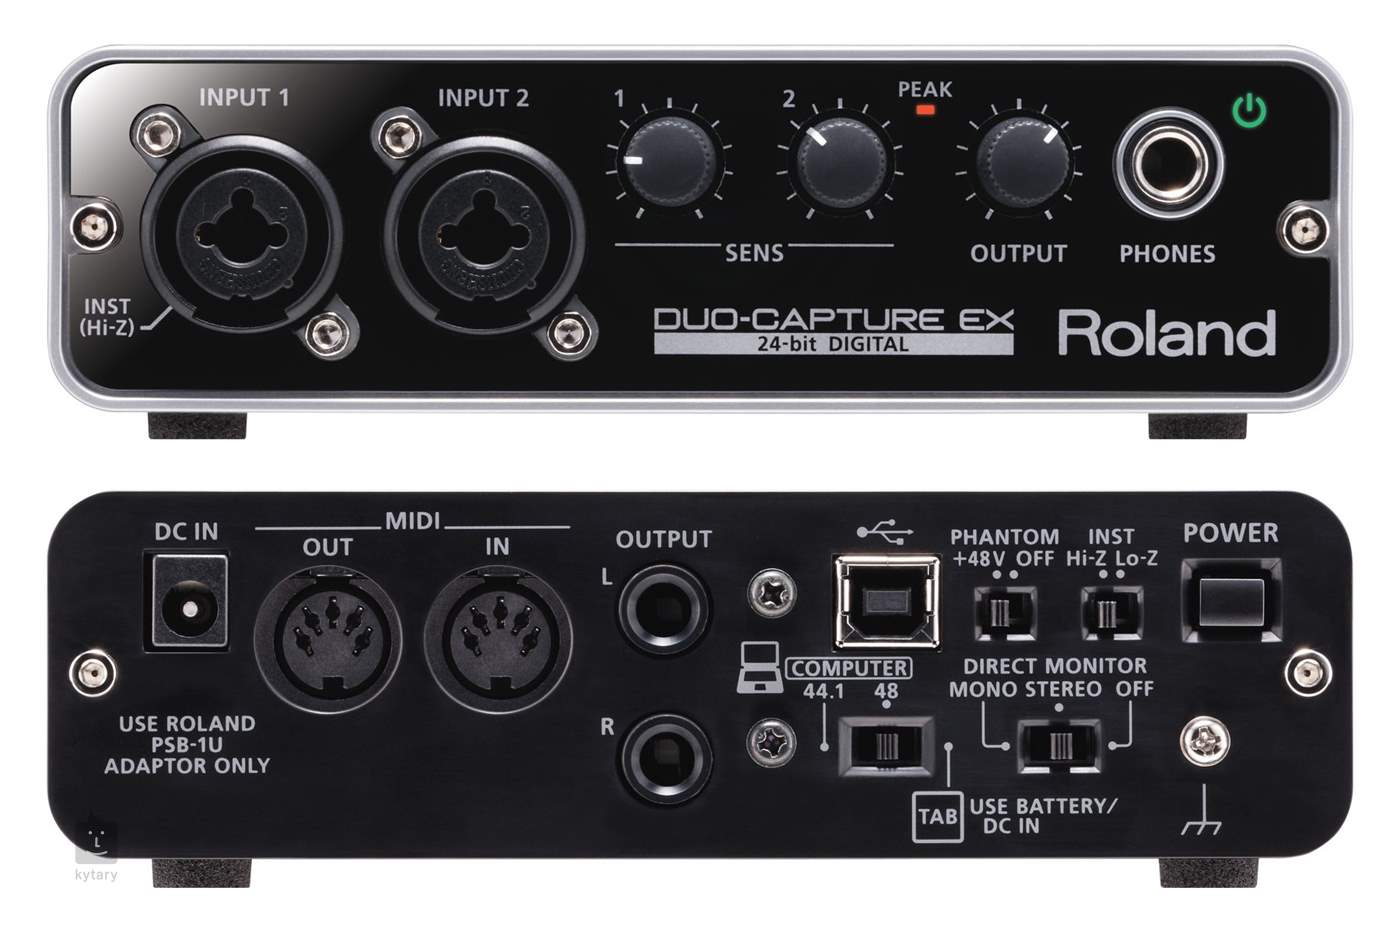 ROLAND UA-22 DUO-CAPTURE EX USB Audio Interface | Kytary.ie